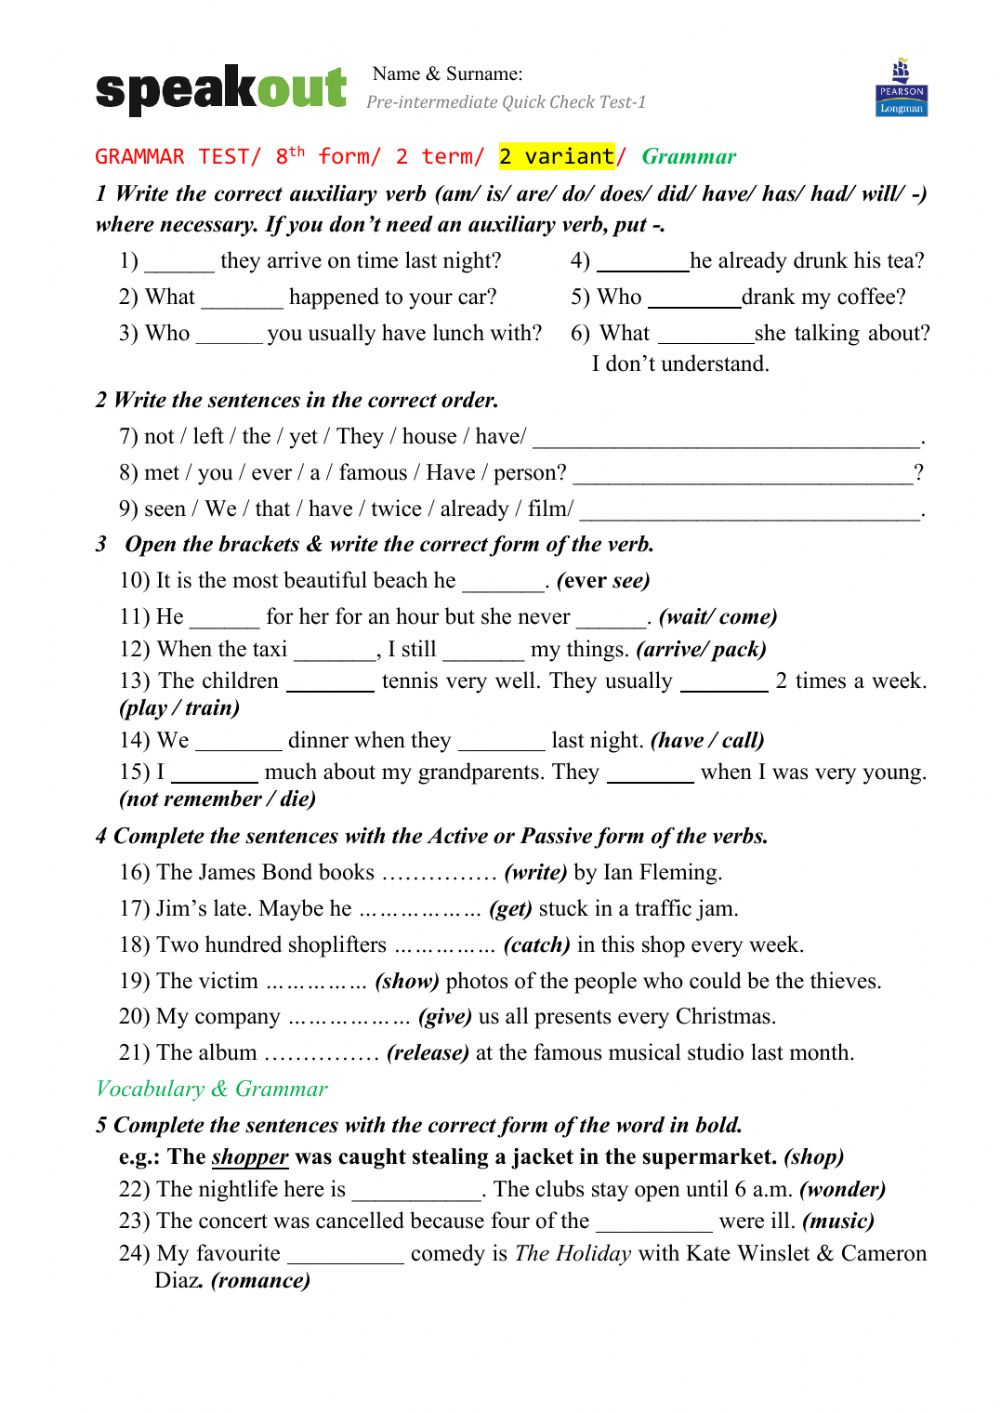 WRITING TEST Grade 8th 2 Term 2 Variant Worksheet